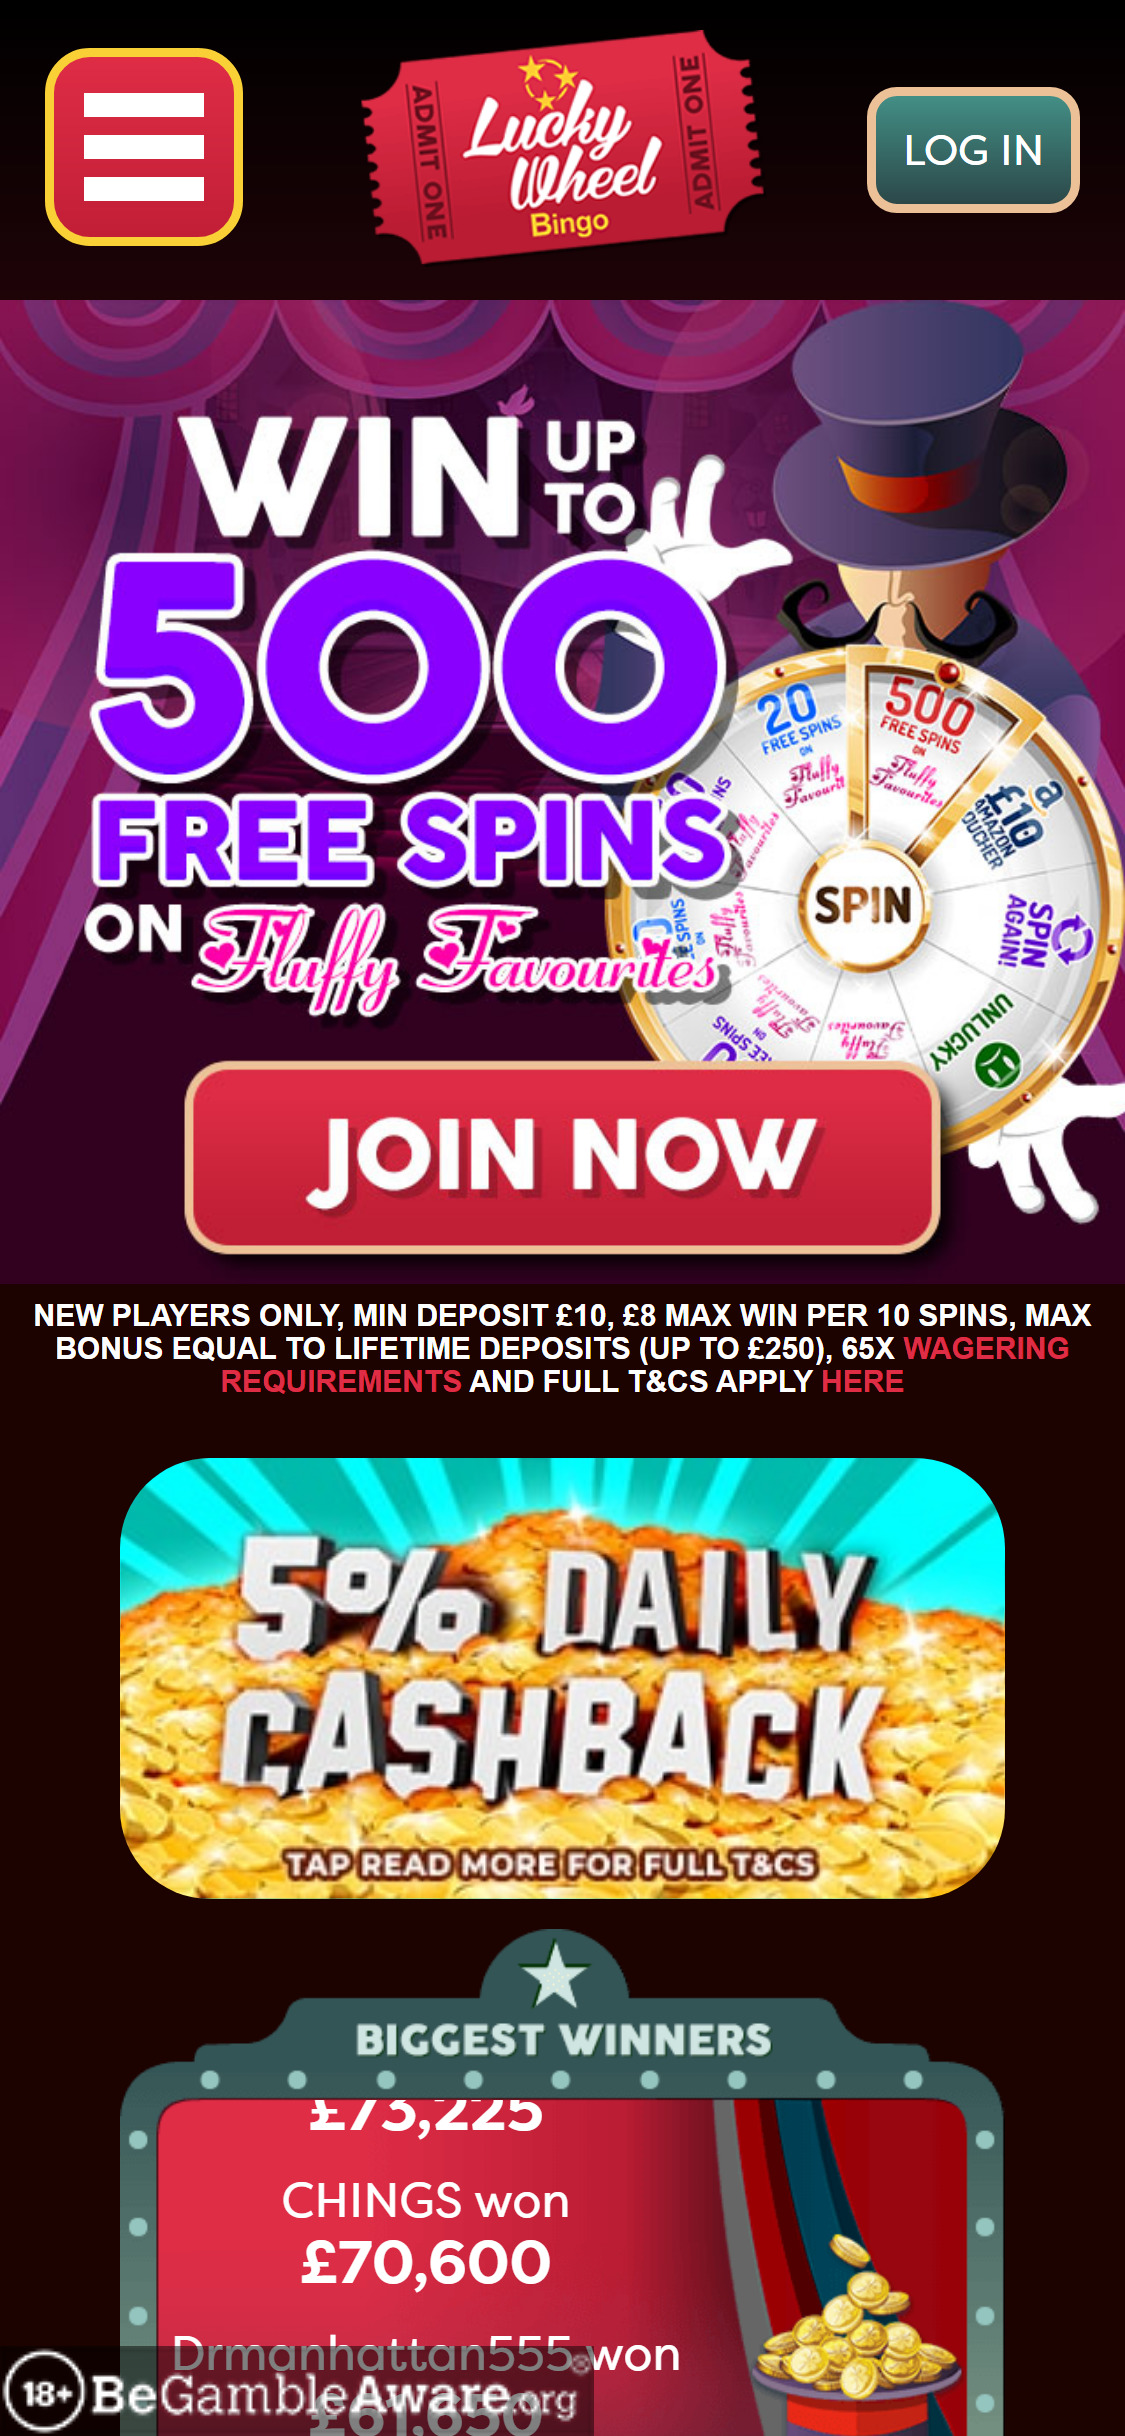 Lucky Wheel Bingo Casino Mobile Login Review